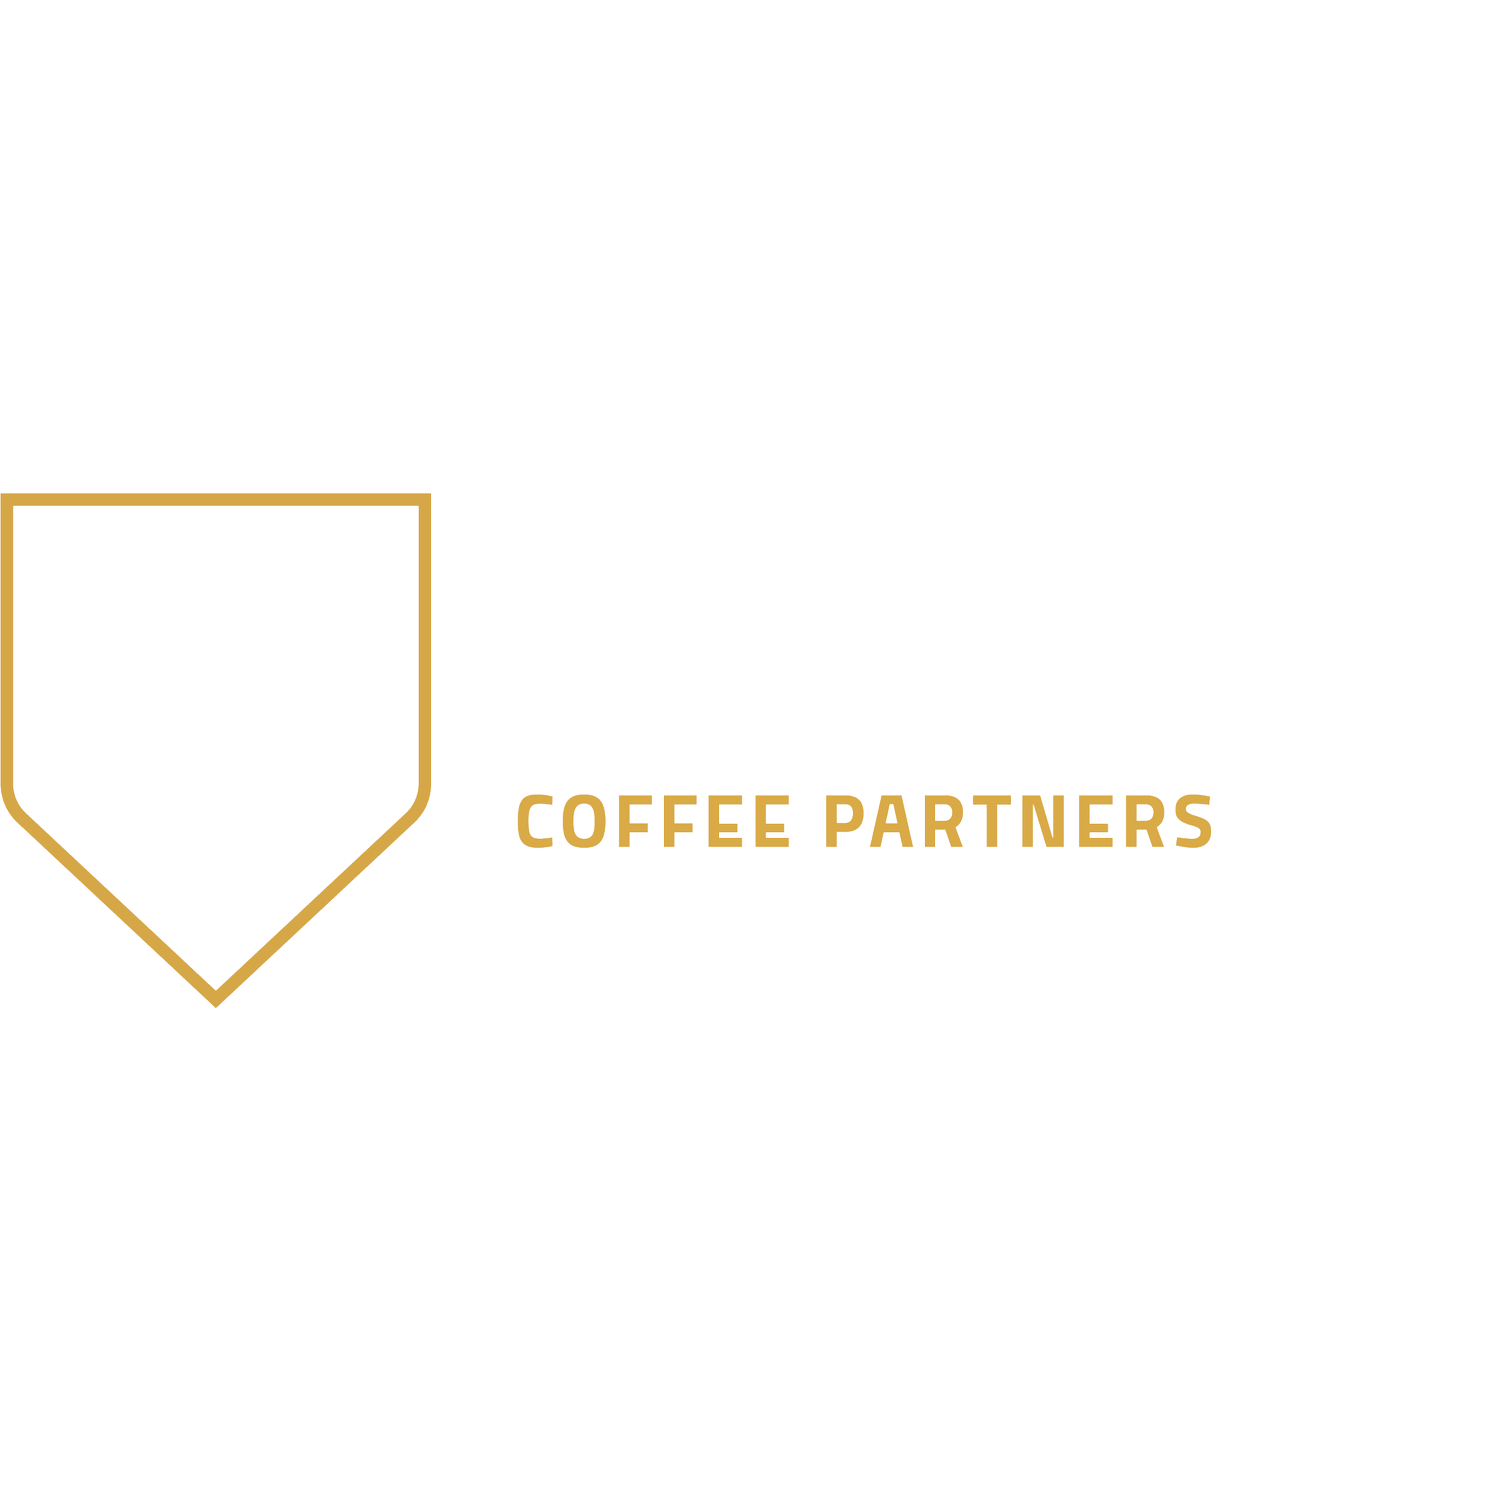 Home Island Coffee Partners